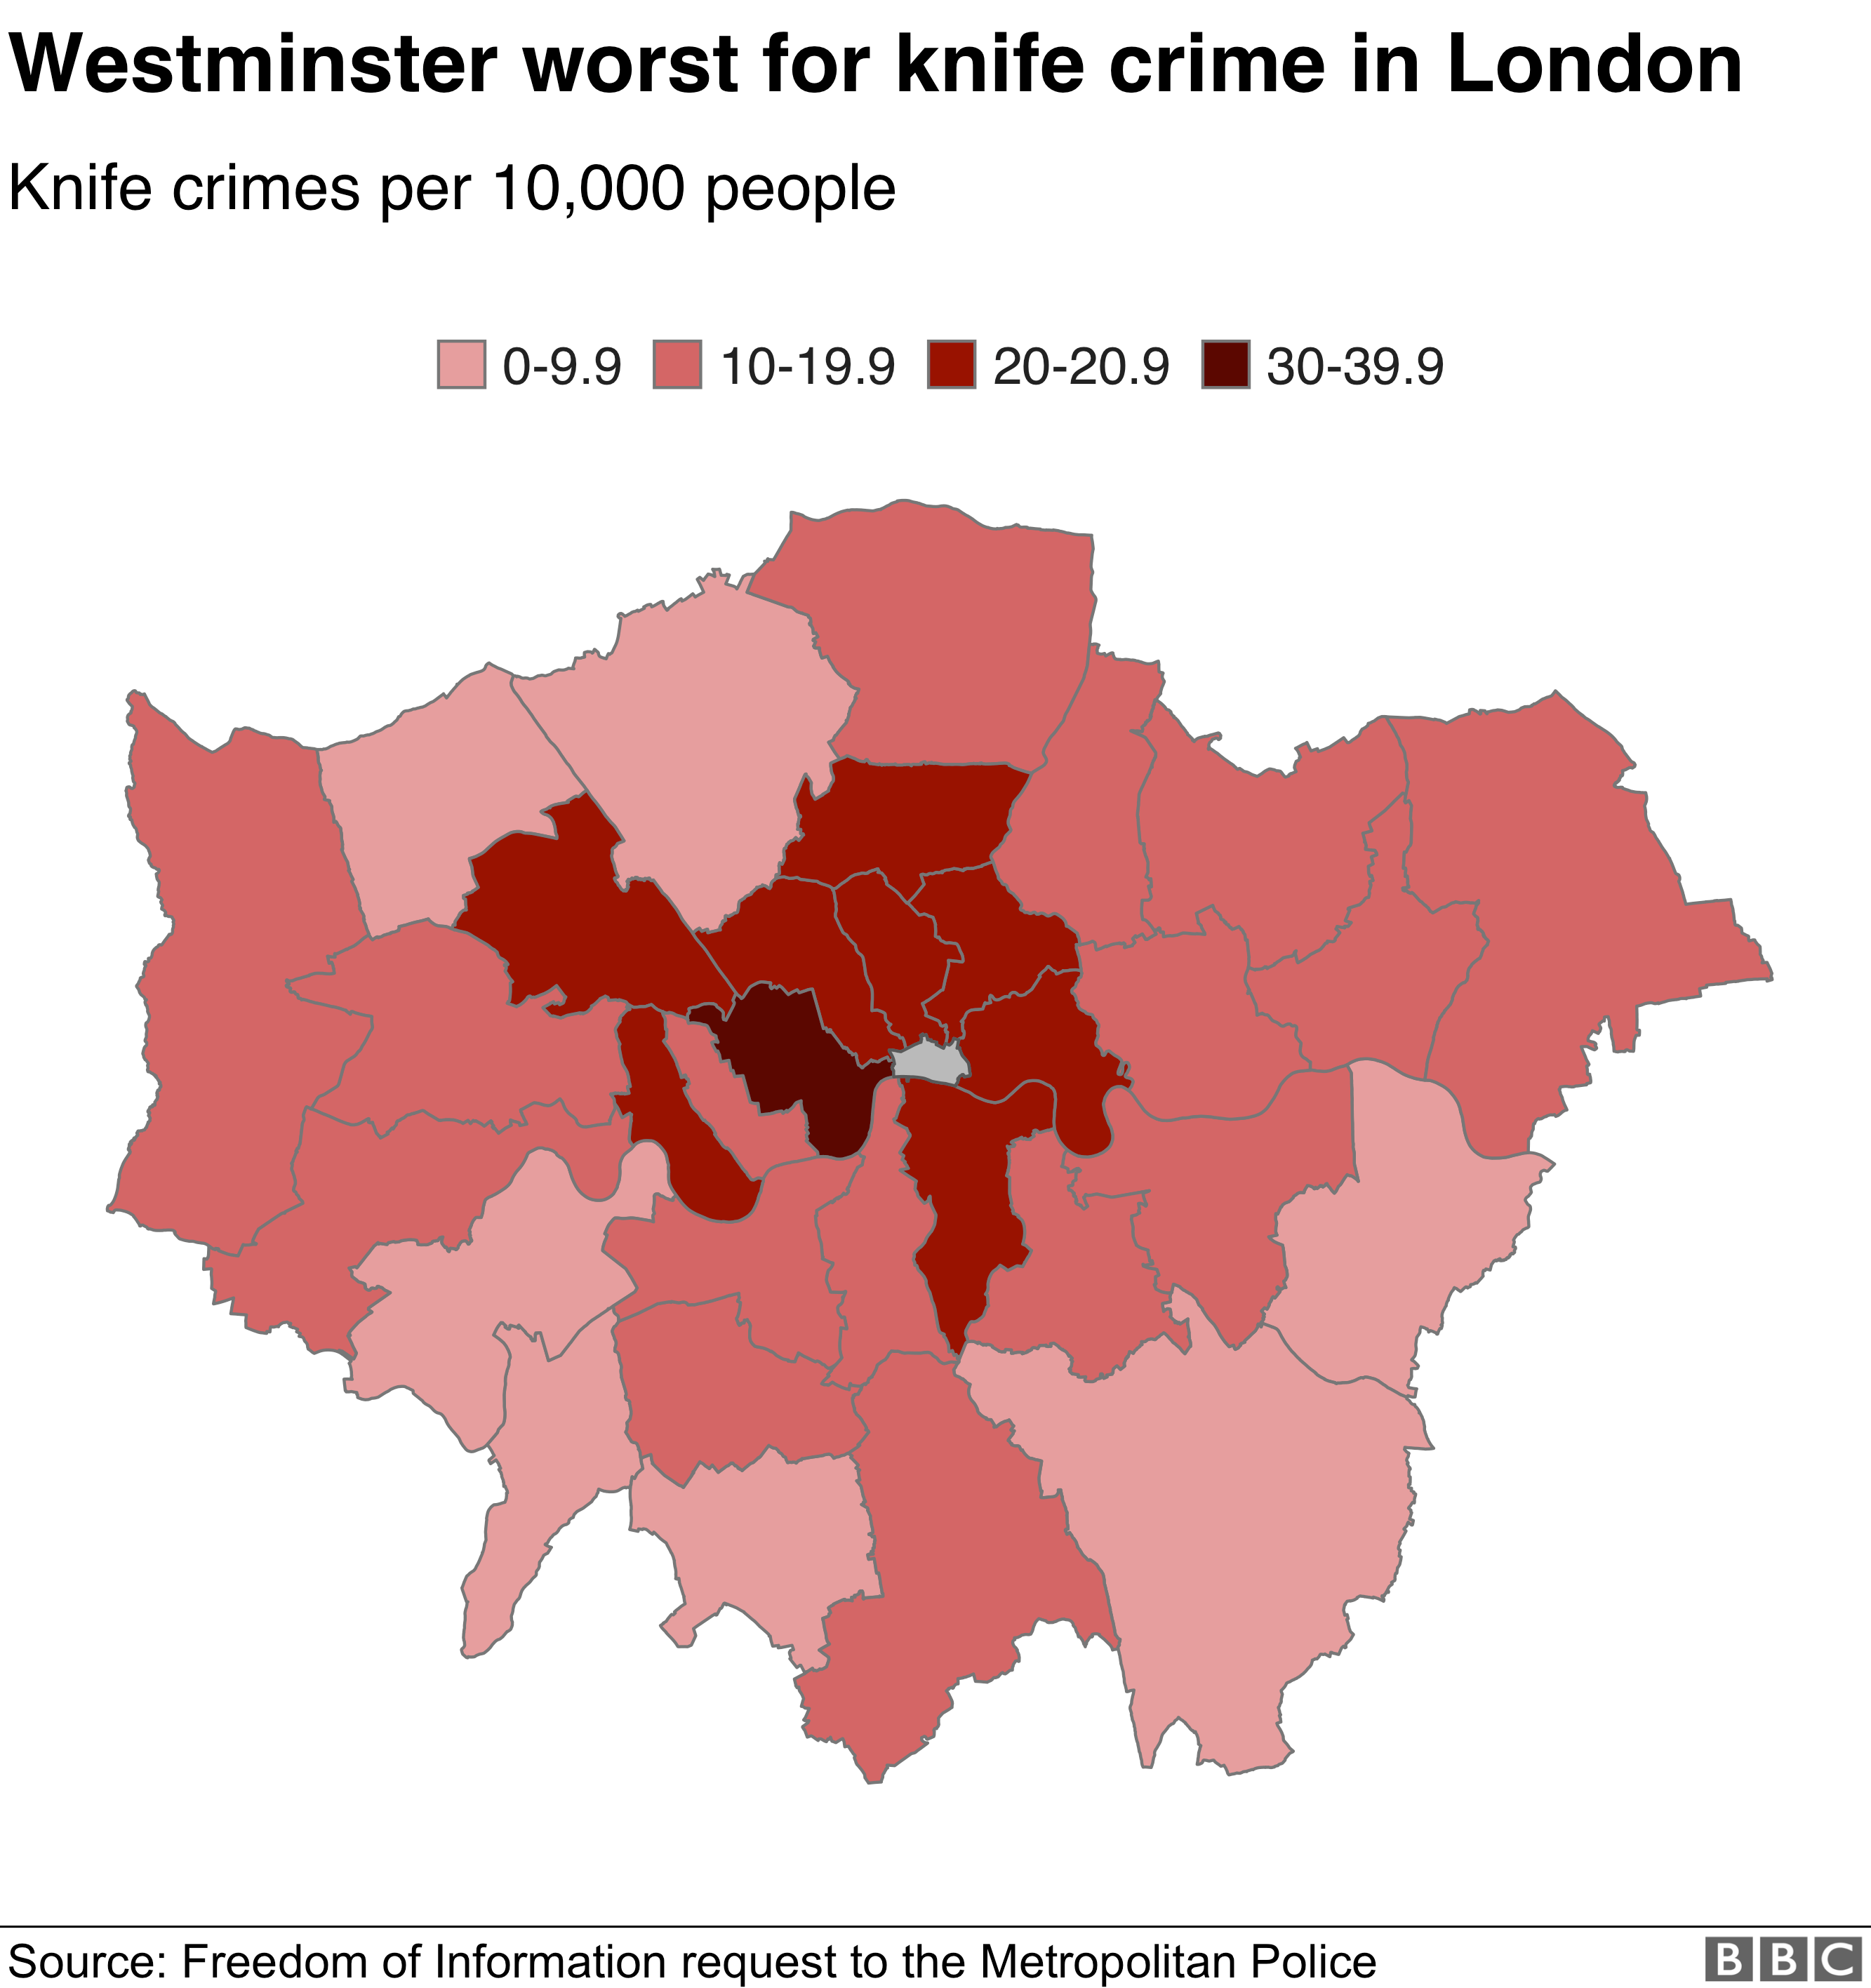 London S Knife Crime Hotspots Revealed c News